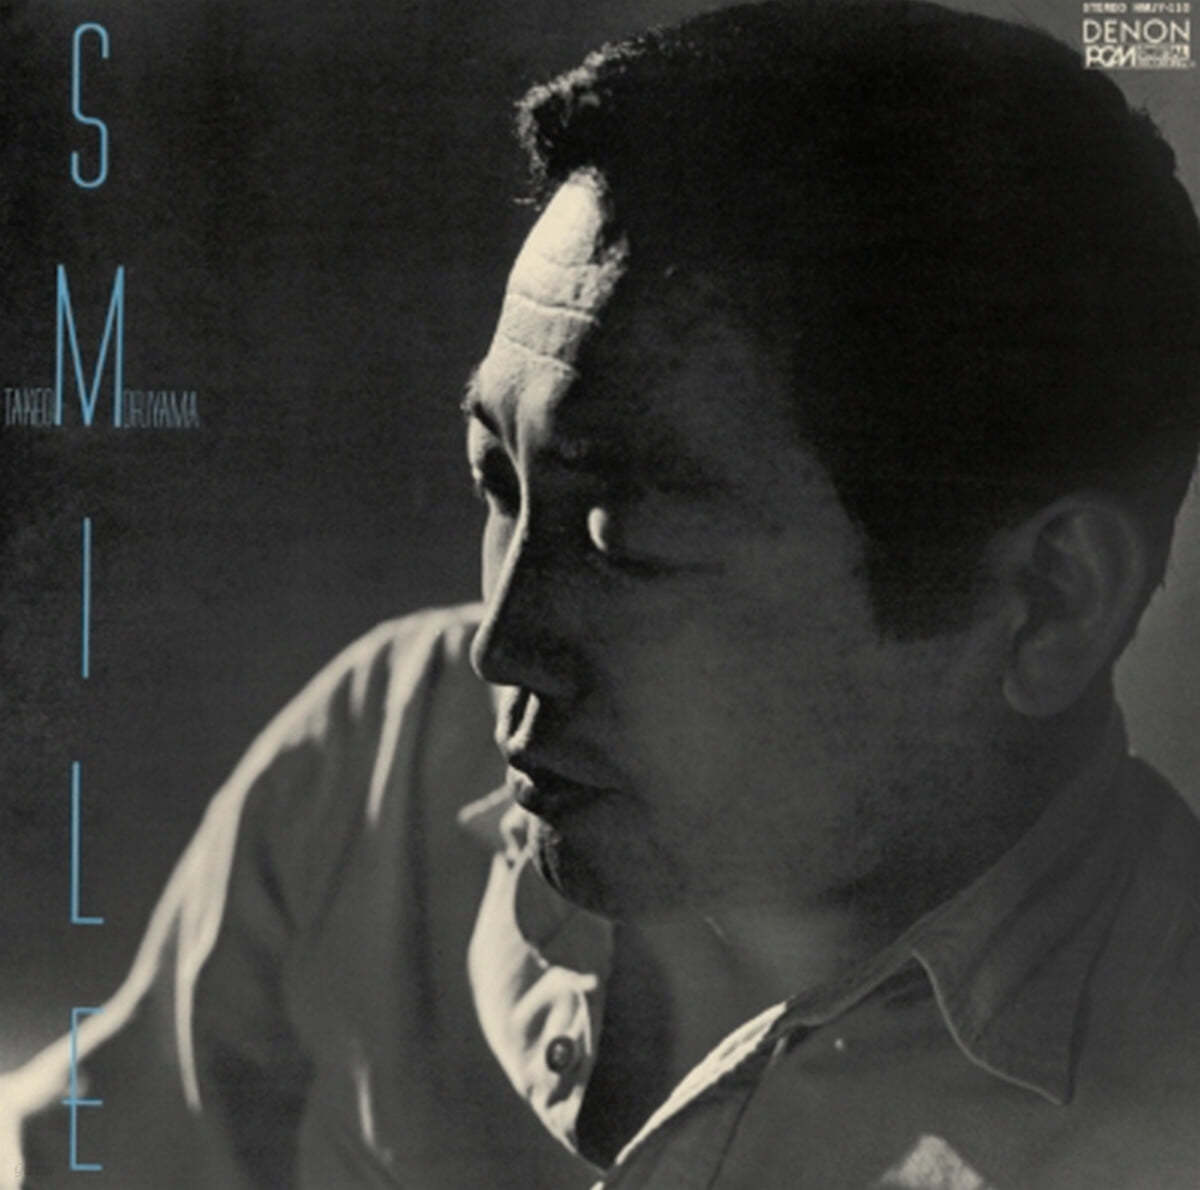 Moriyama Takeo (모리야마 타케오) - Smile [LP]